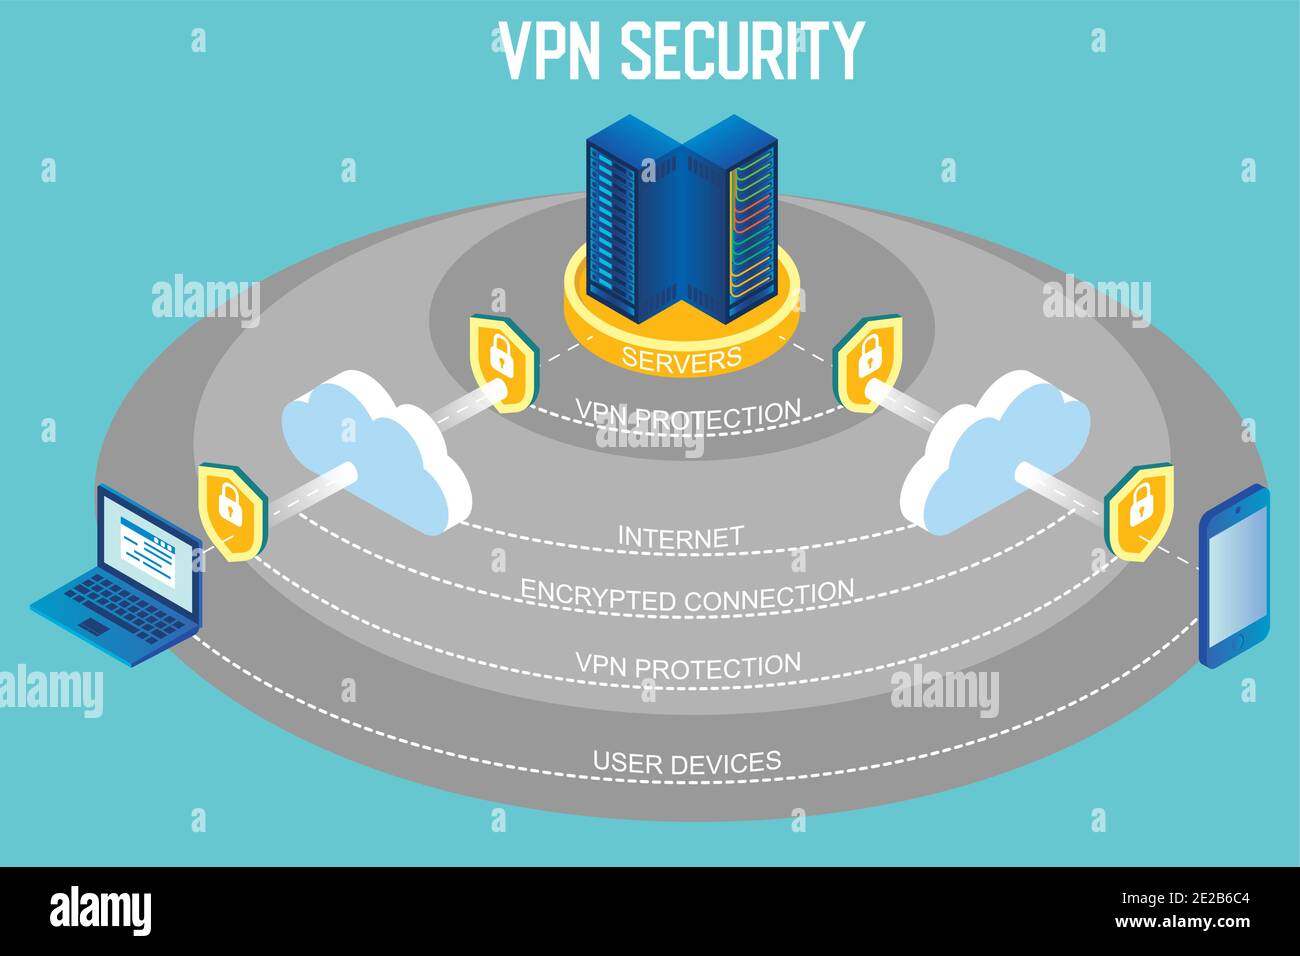 VPN security vector isometric infographic Stock Vector